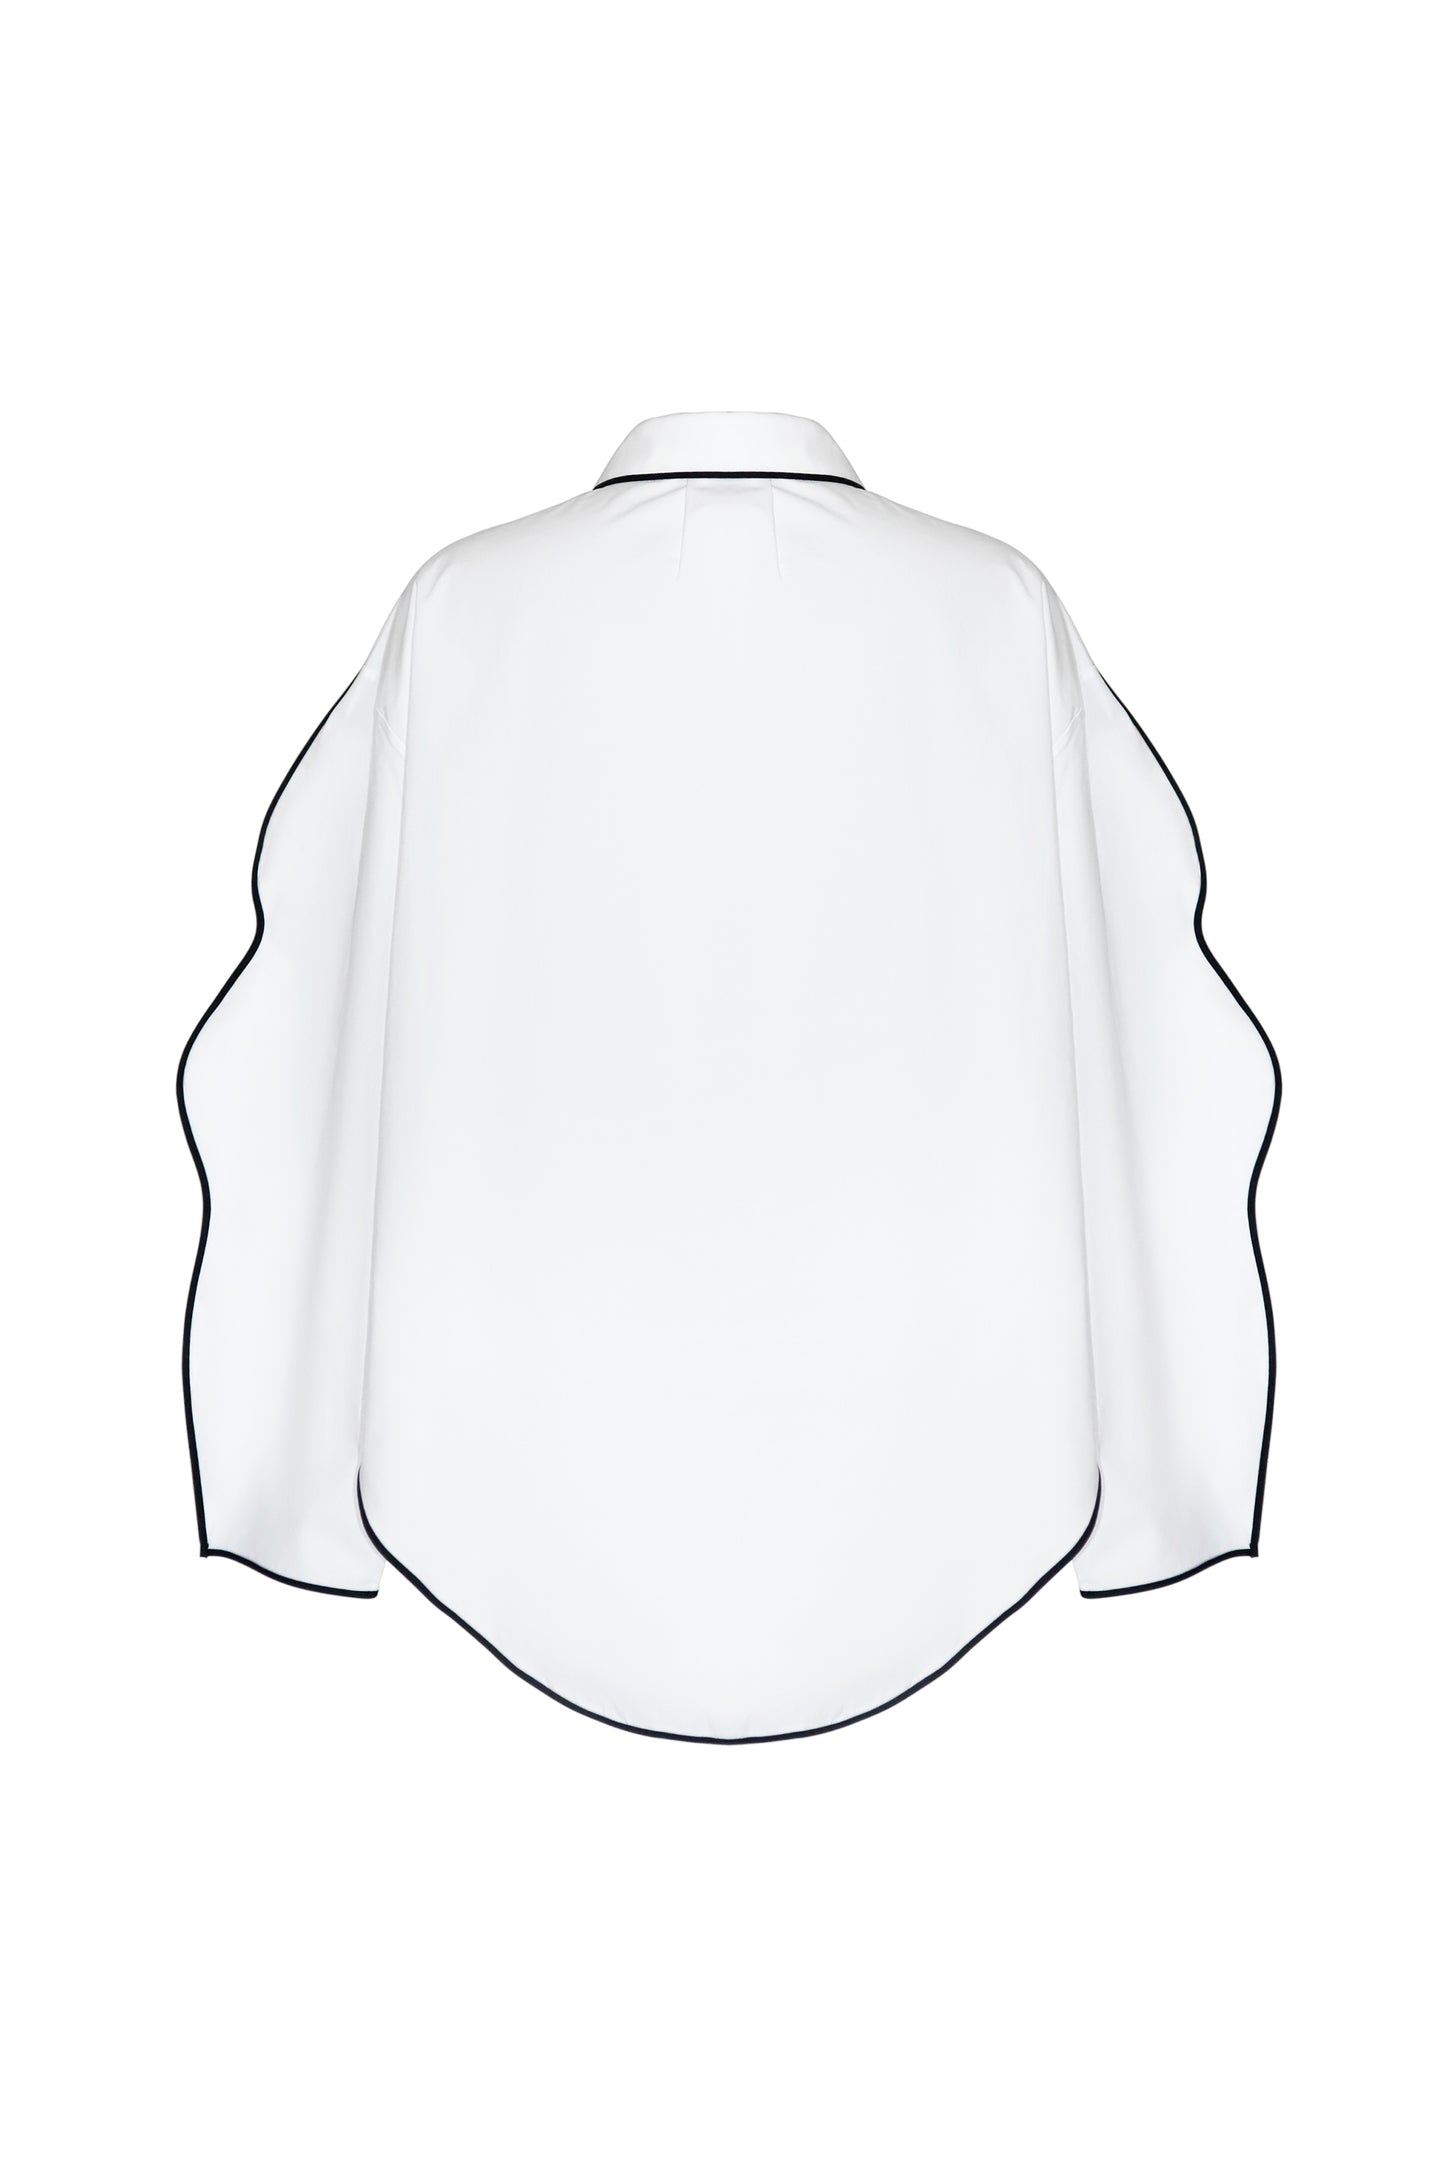 Armine Ohanyan White silhouette shirt back view